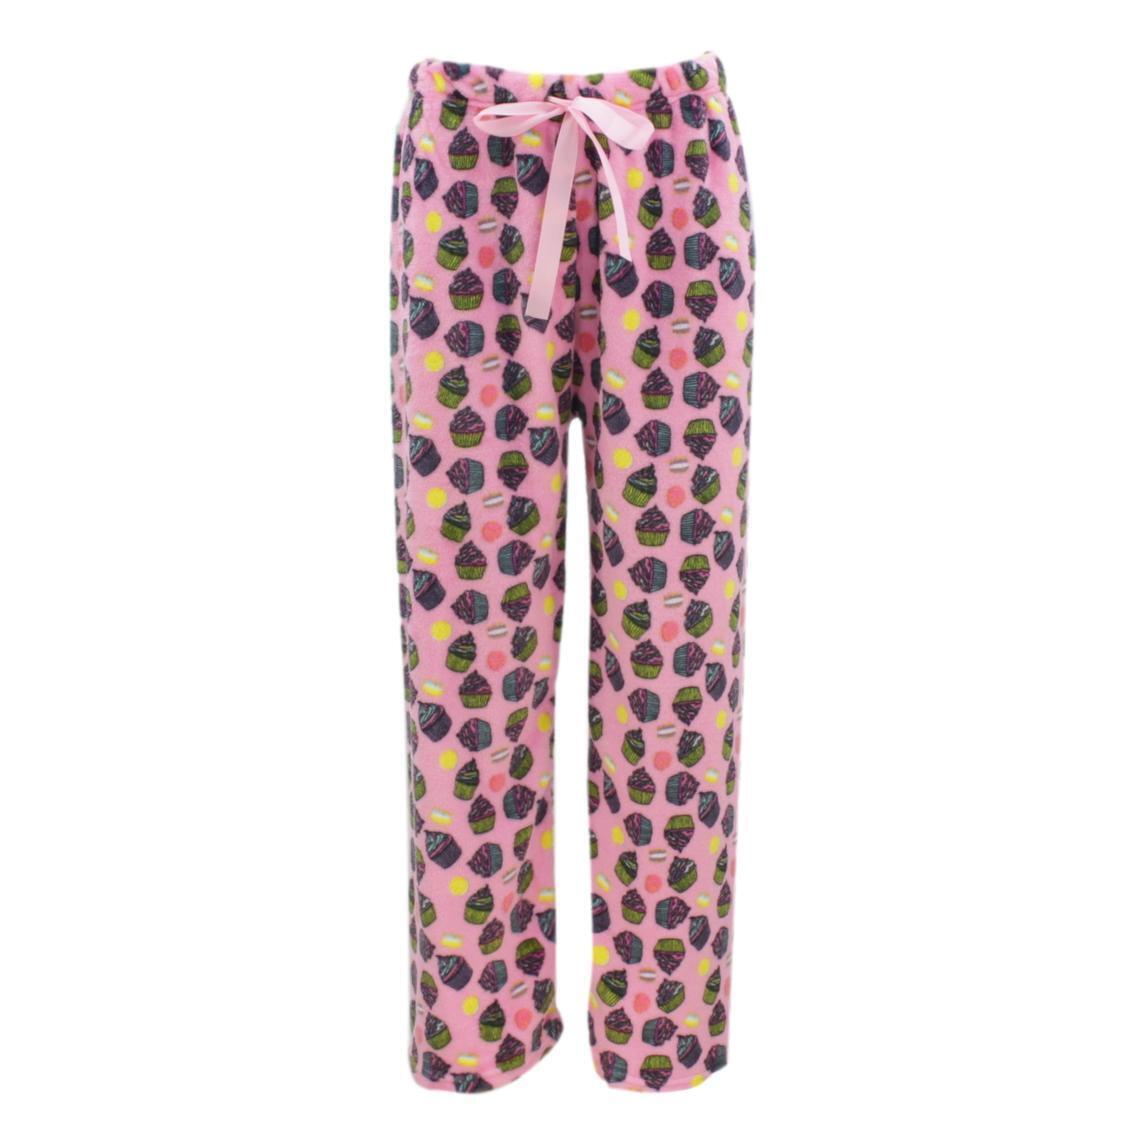 Charmour - Polar fleece PJ pants - Pink plaid. Colour: pink. Size